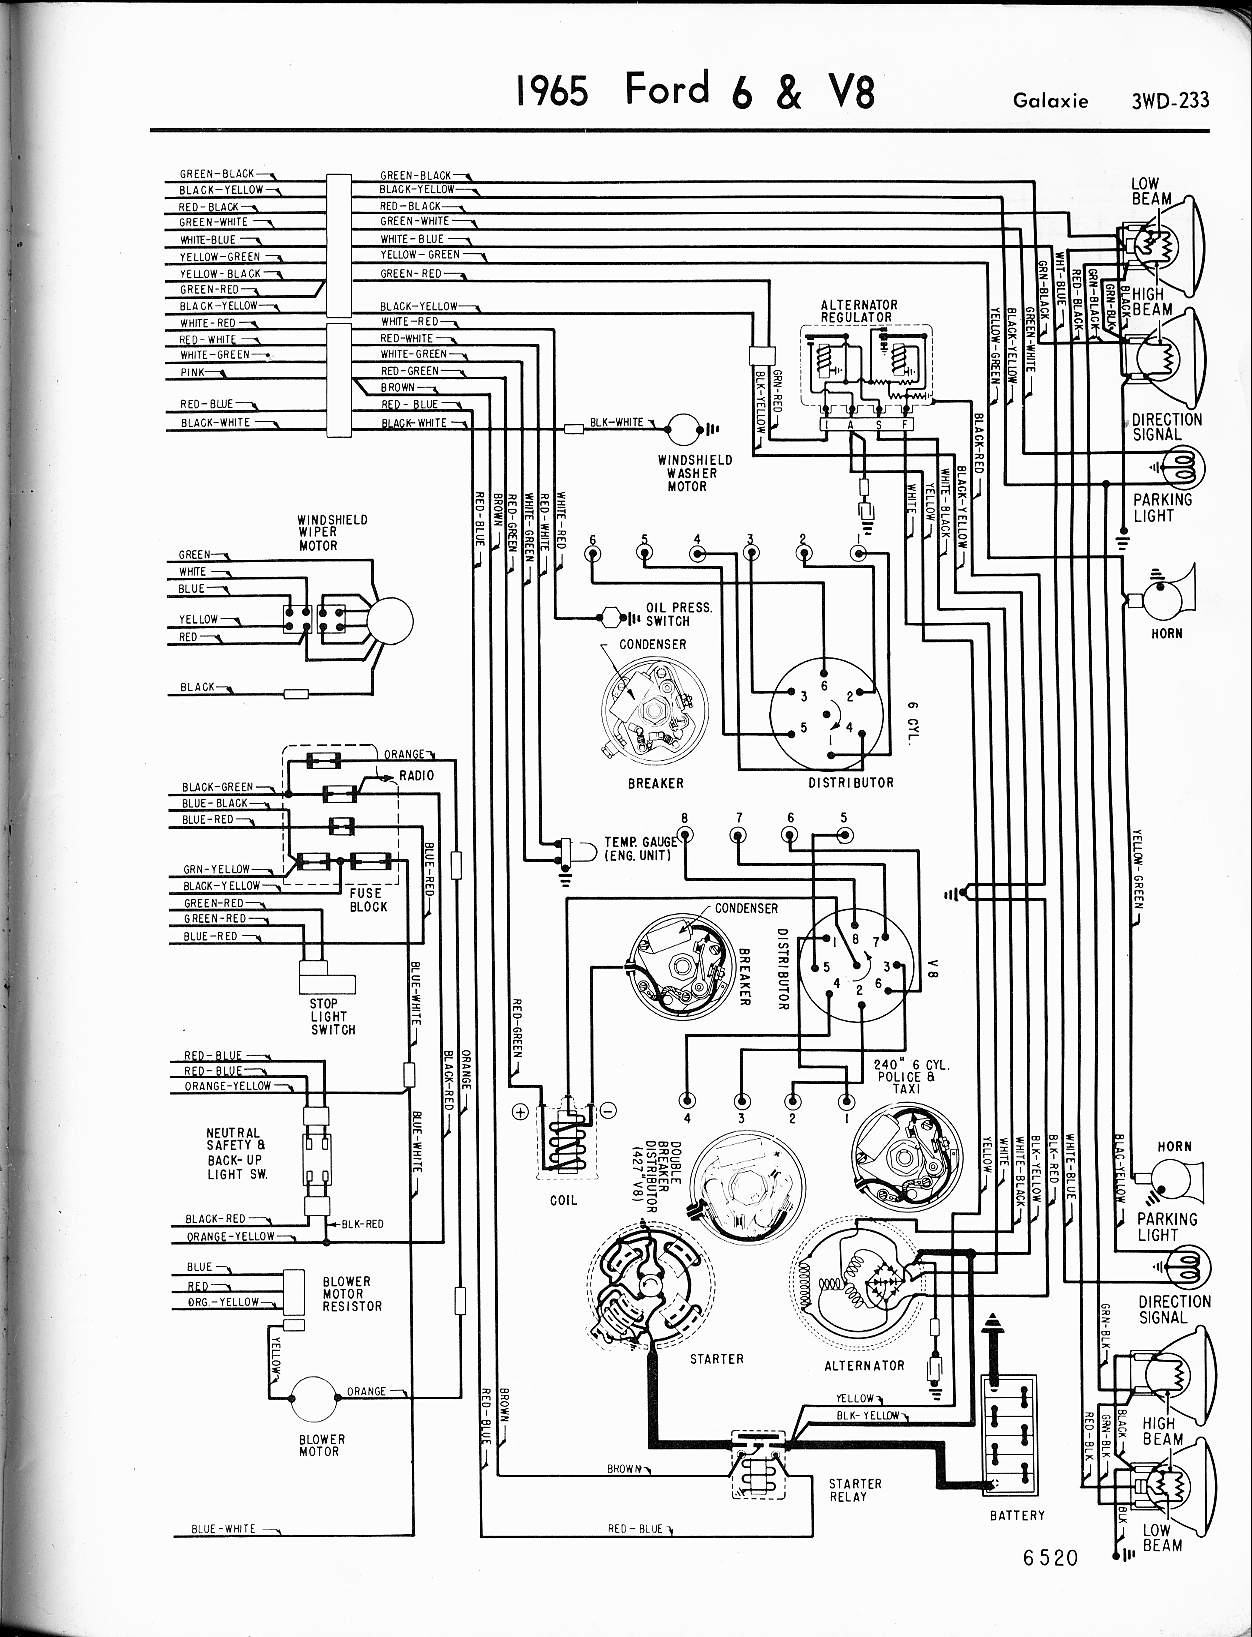 57 65 Ford Wiring Diagrams, 1965 Ford Mustang Wiring Diagram Pdf